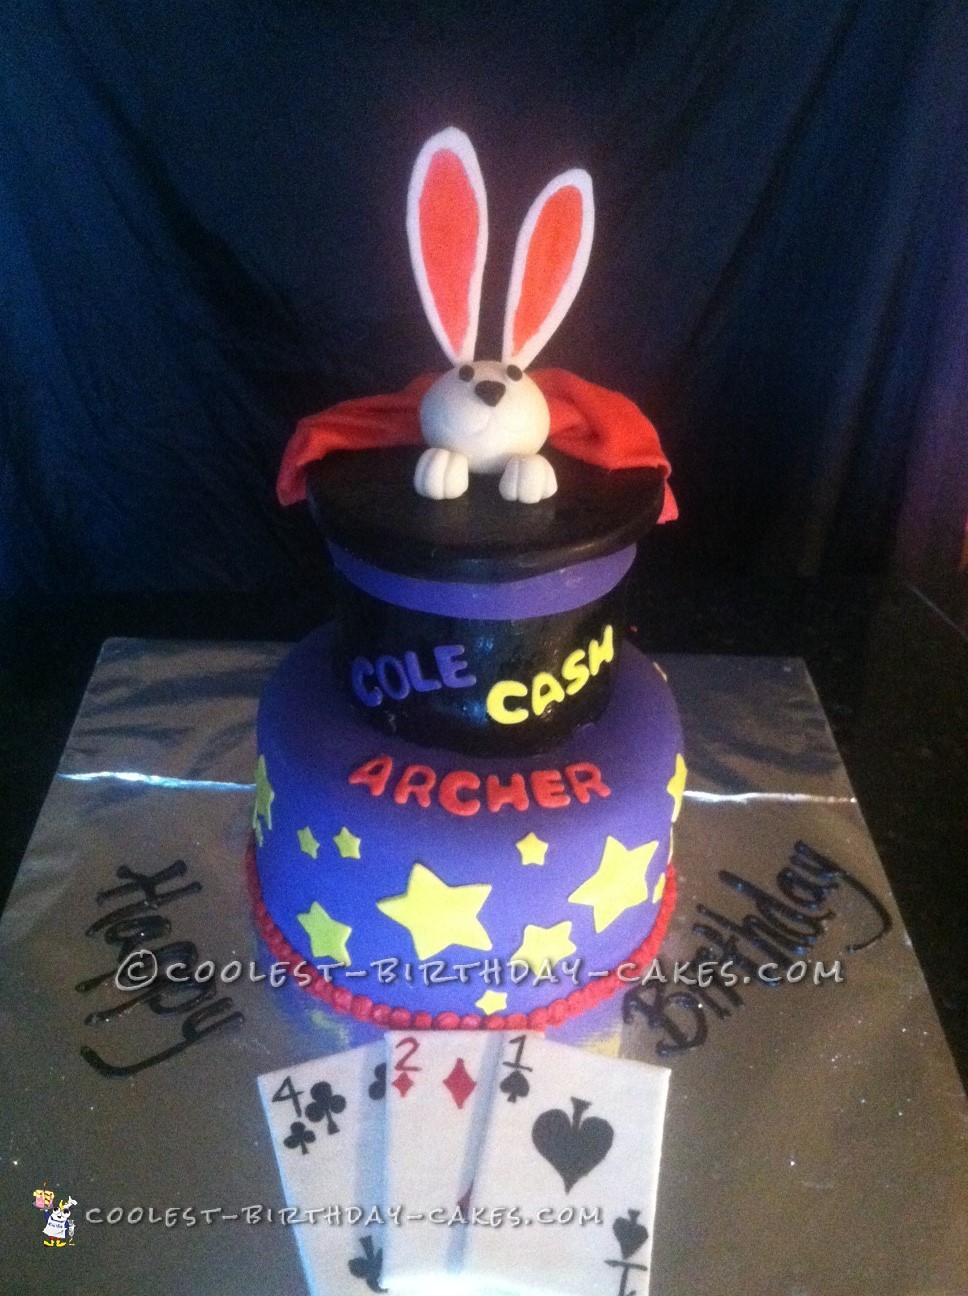 Abracadabra! Cool Magical Birthday Cake